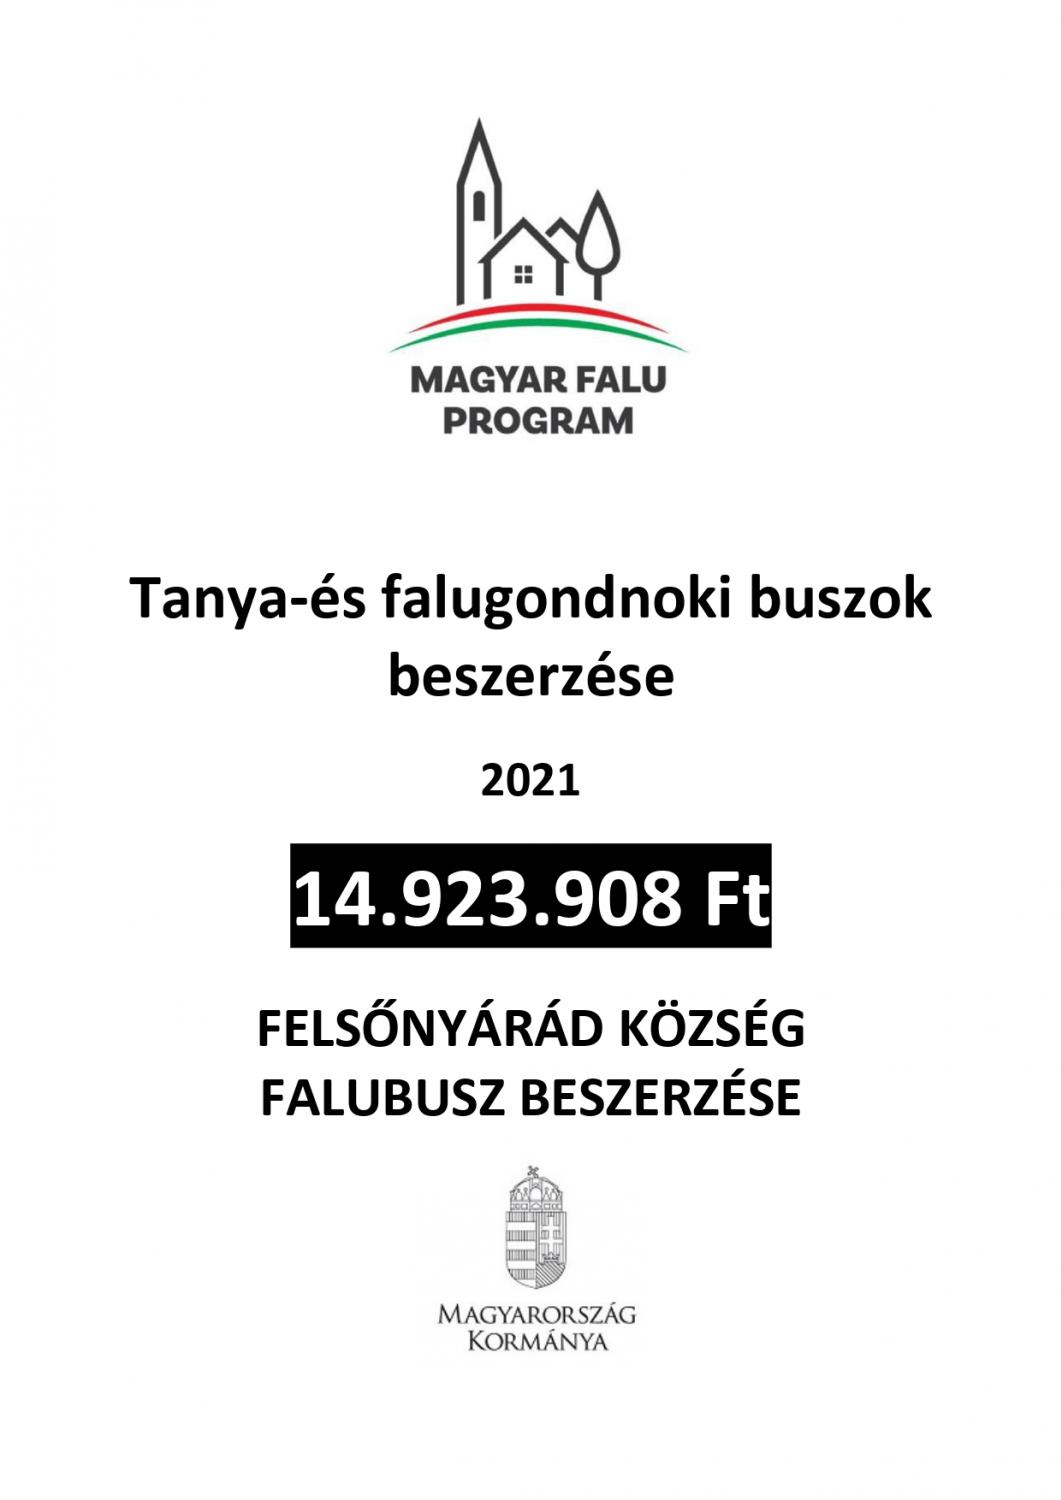 Magyar Falu Program keretében 